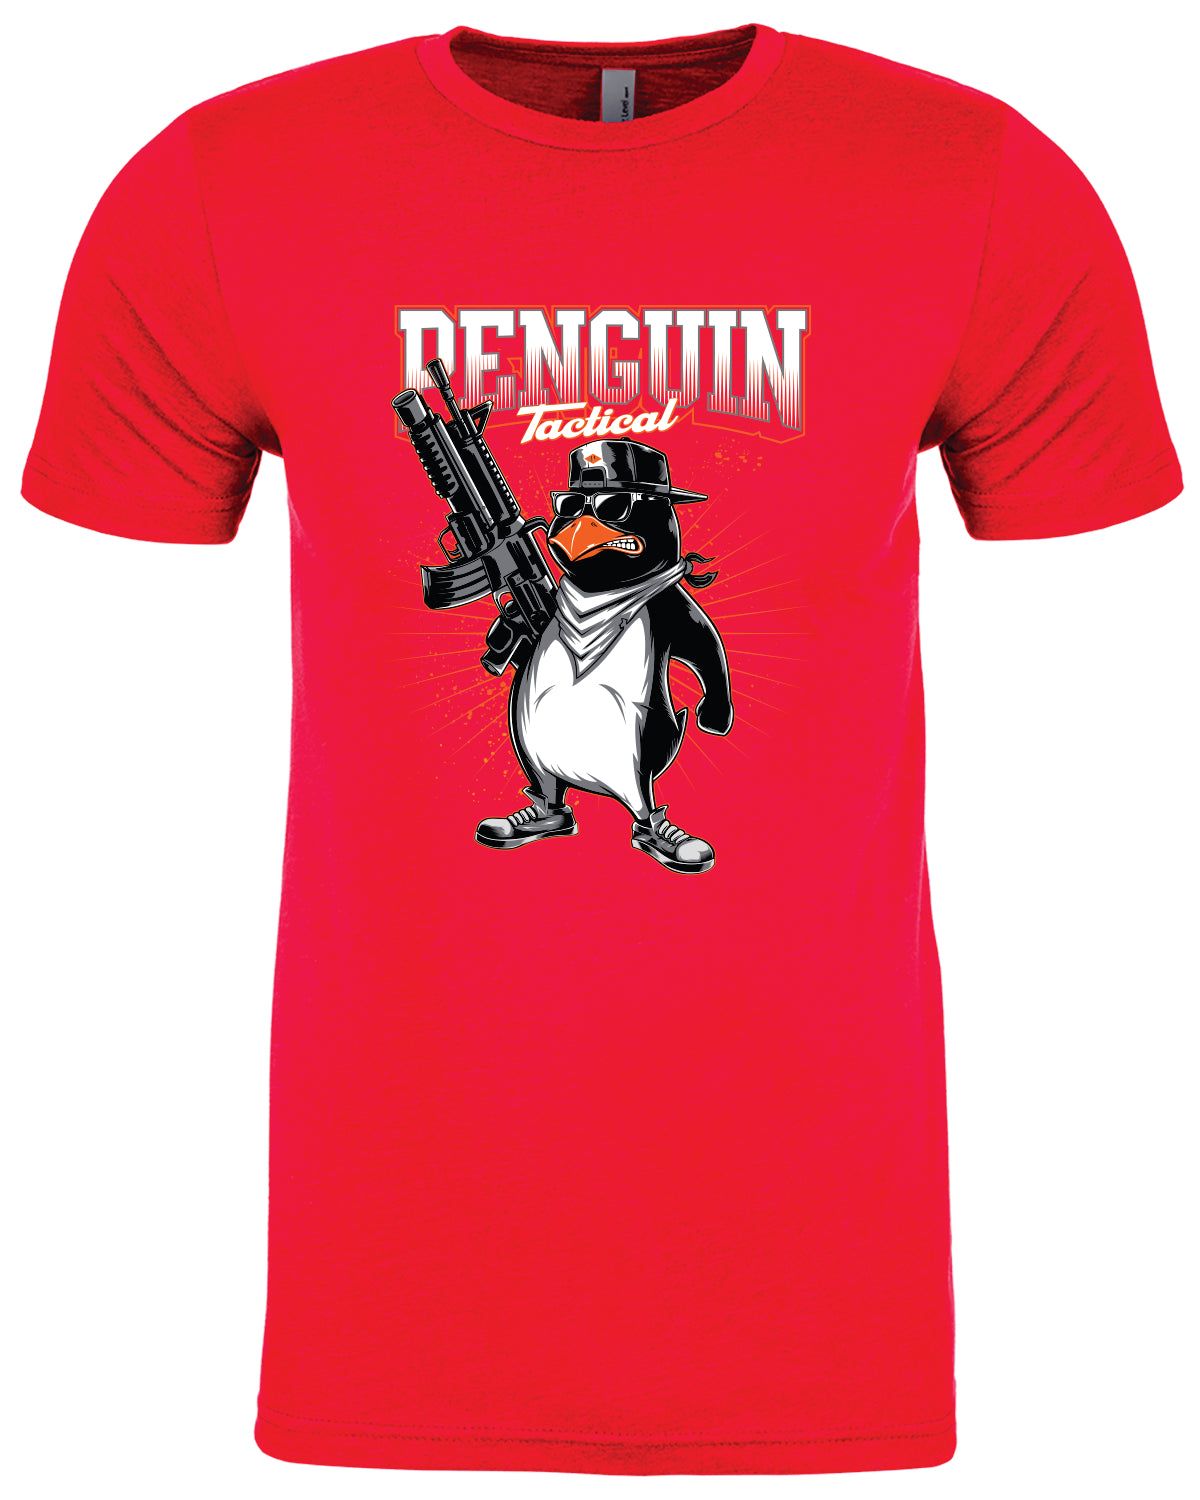 Penguin Tactical T-shirt